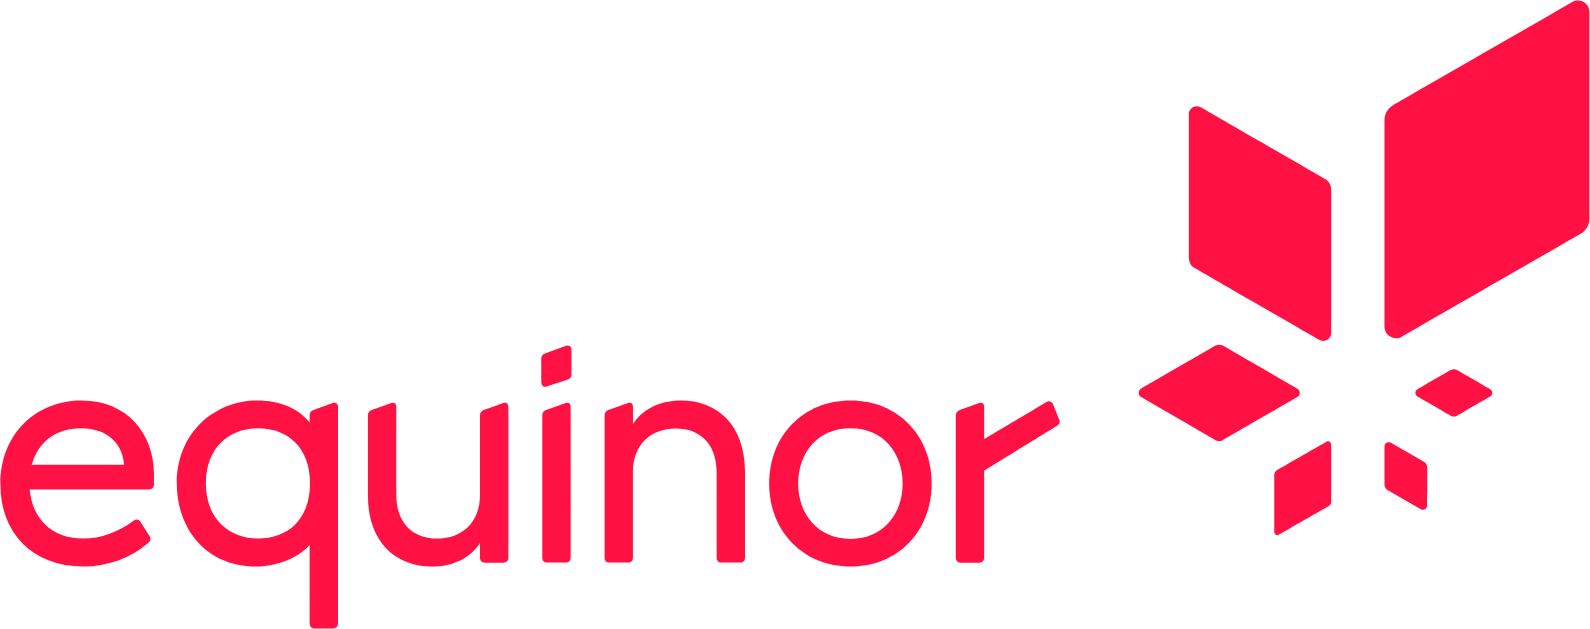 Equinor logo large (transparent PNG)